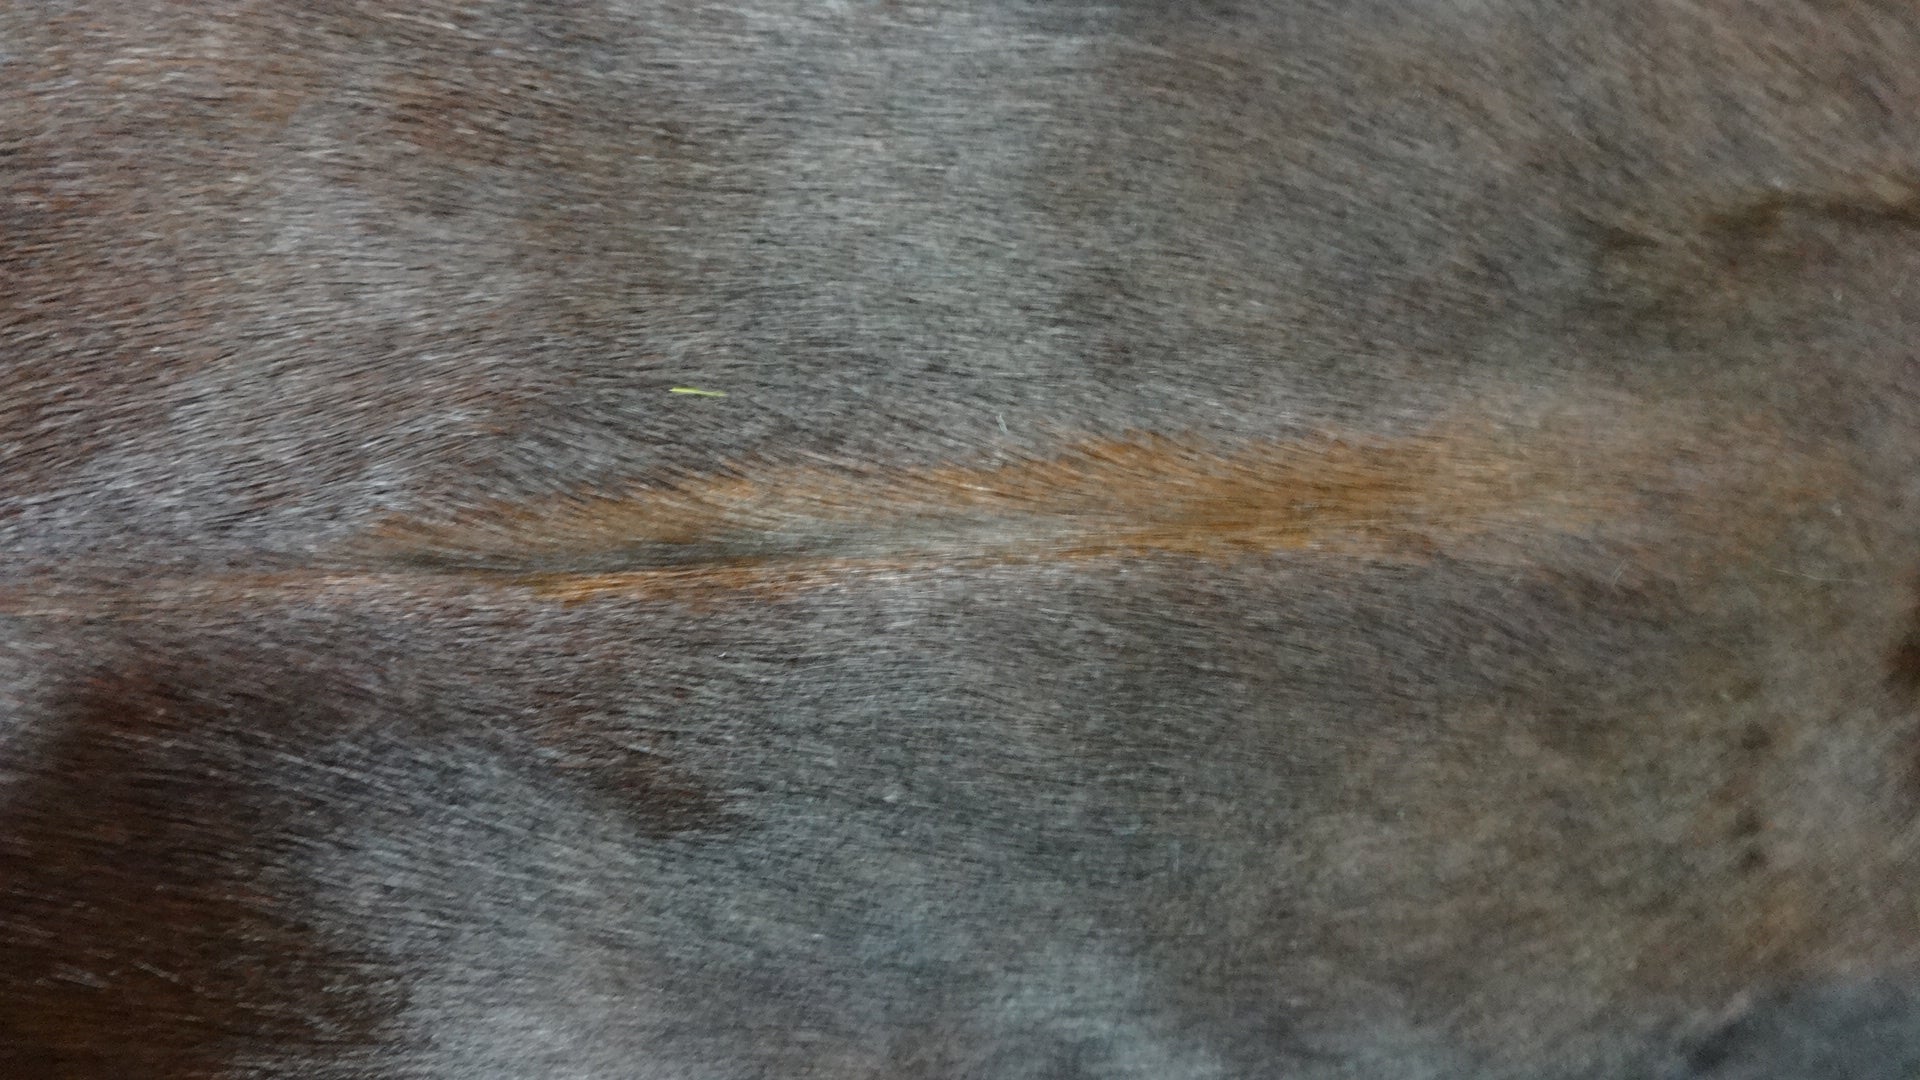 Dyed Sandalwood Springbok Skins Large from Africa Antelope Hide